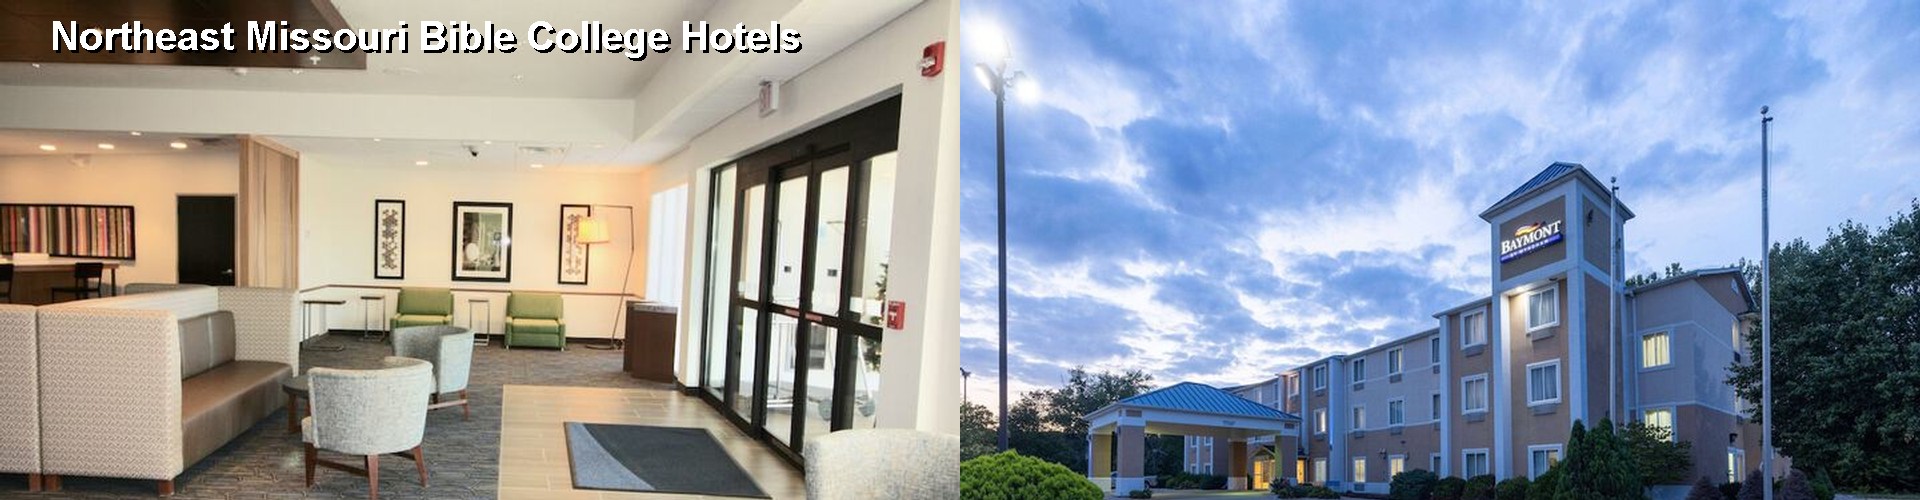 3 Best Hotels near Northeast Missouri Bible College